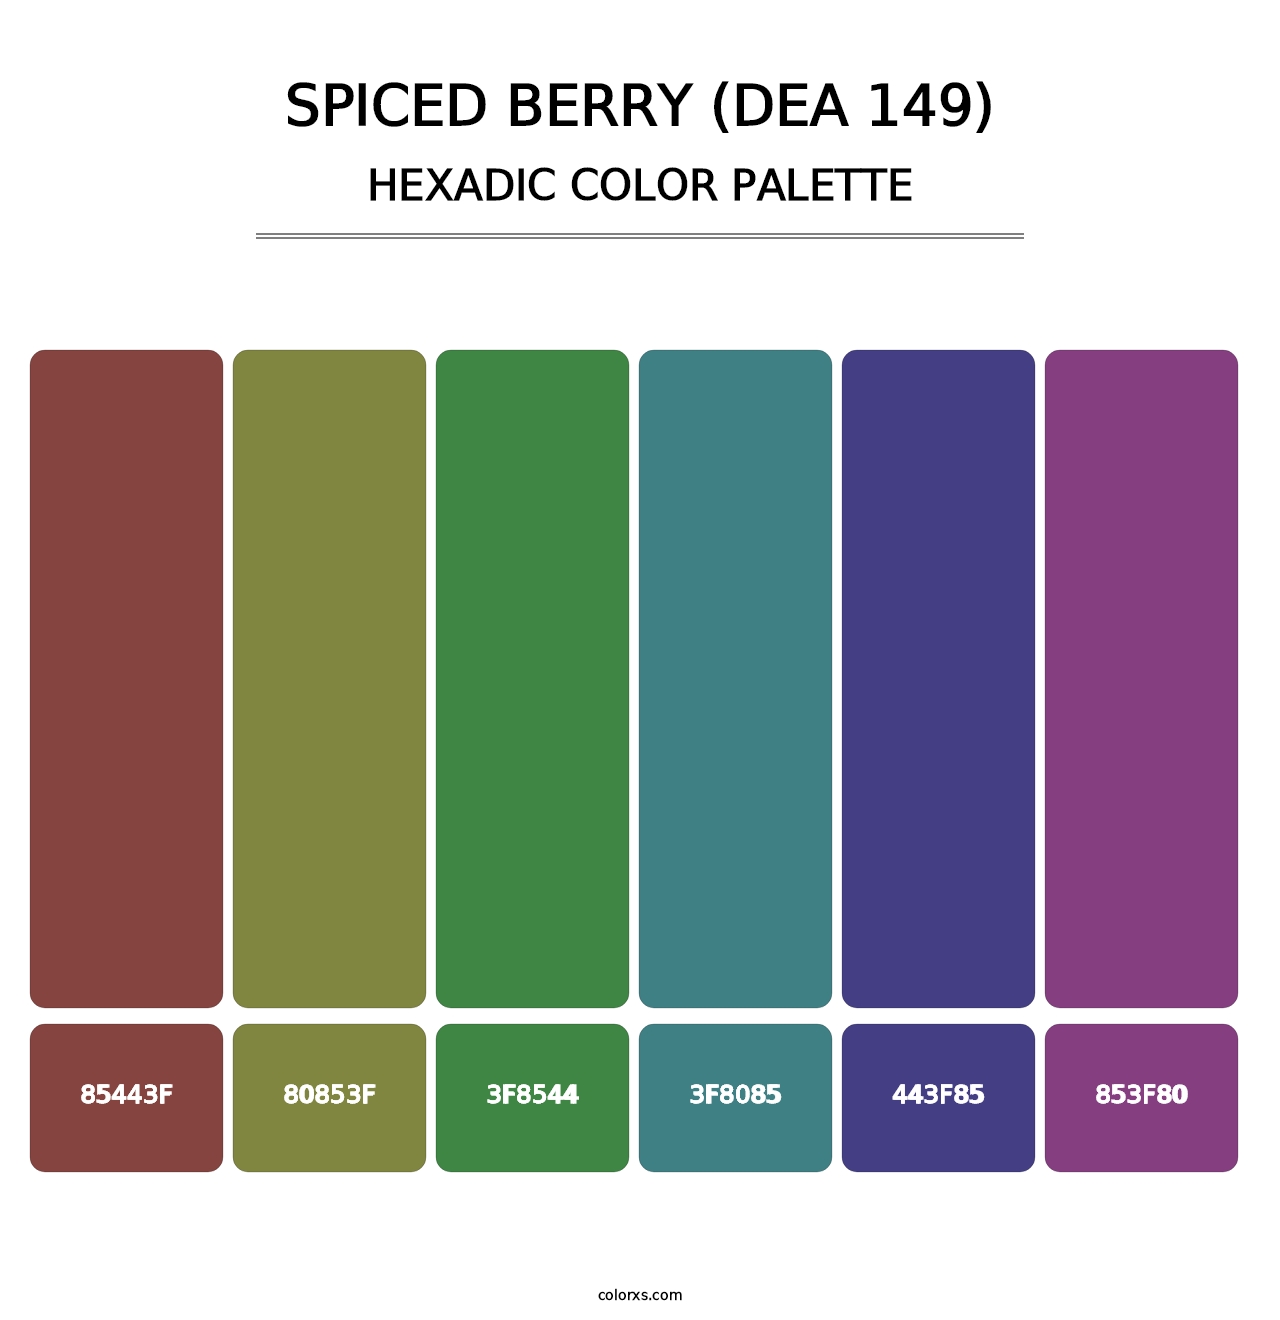 Spiced Berry (DEA 149) - Hexadic Color Palette